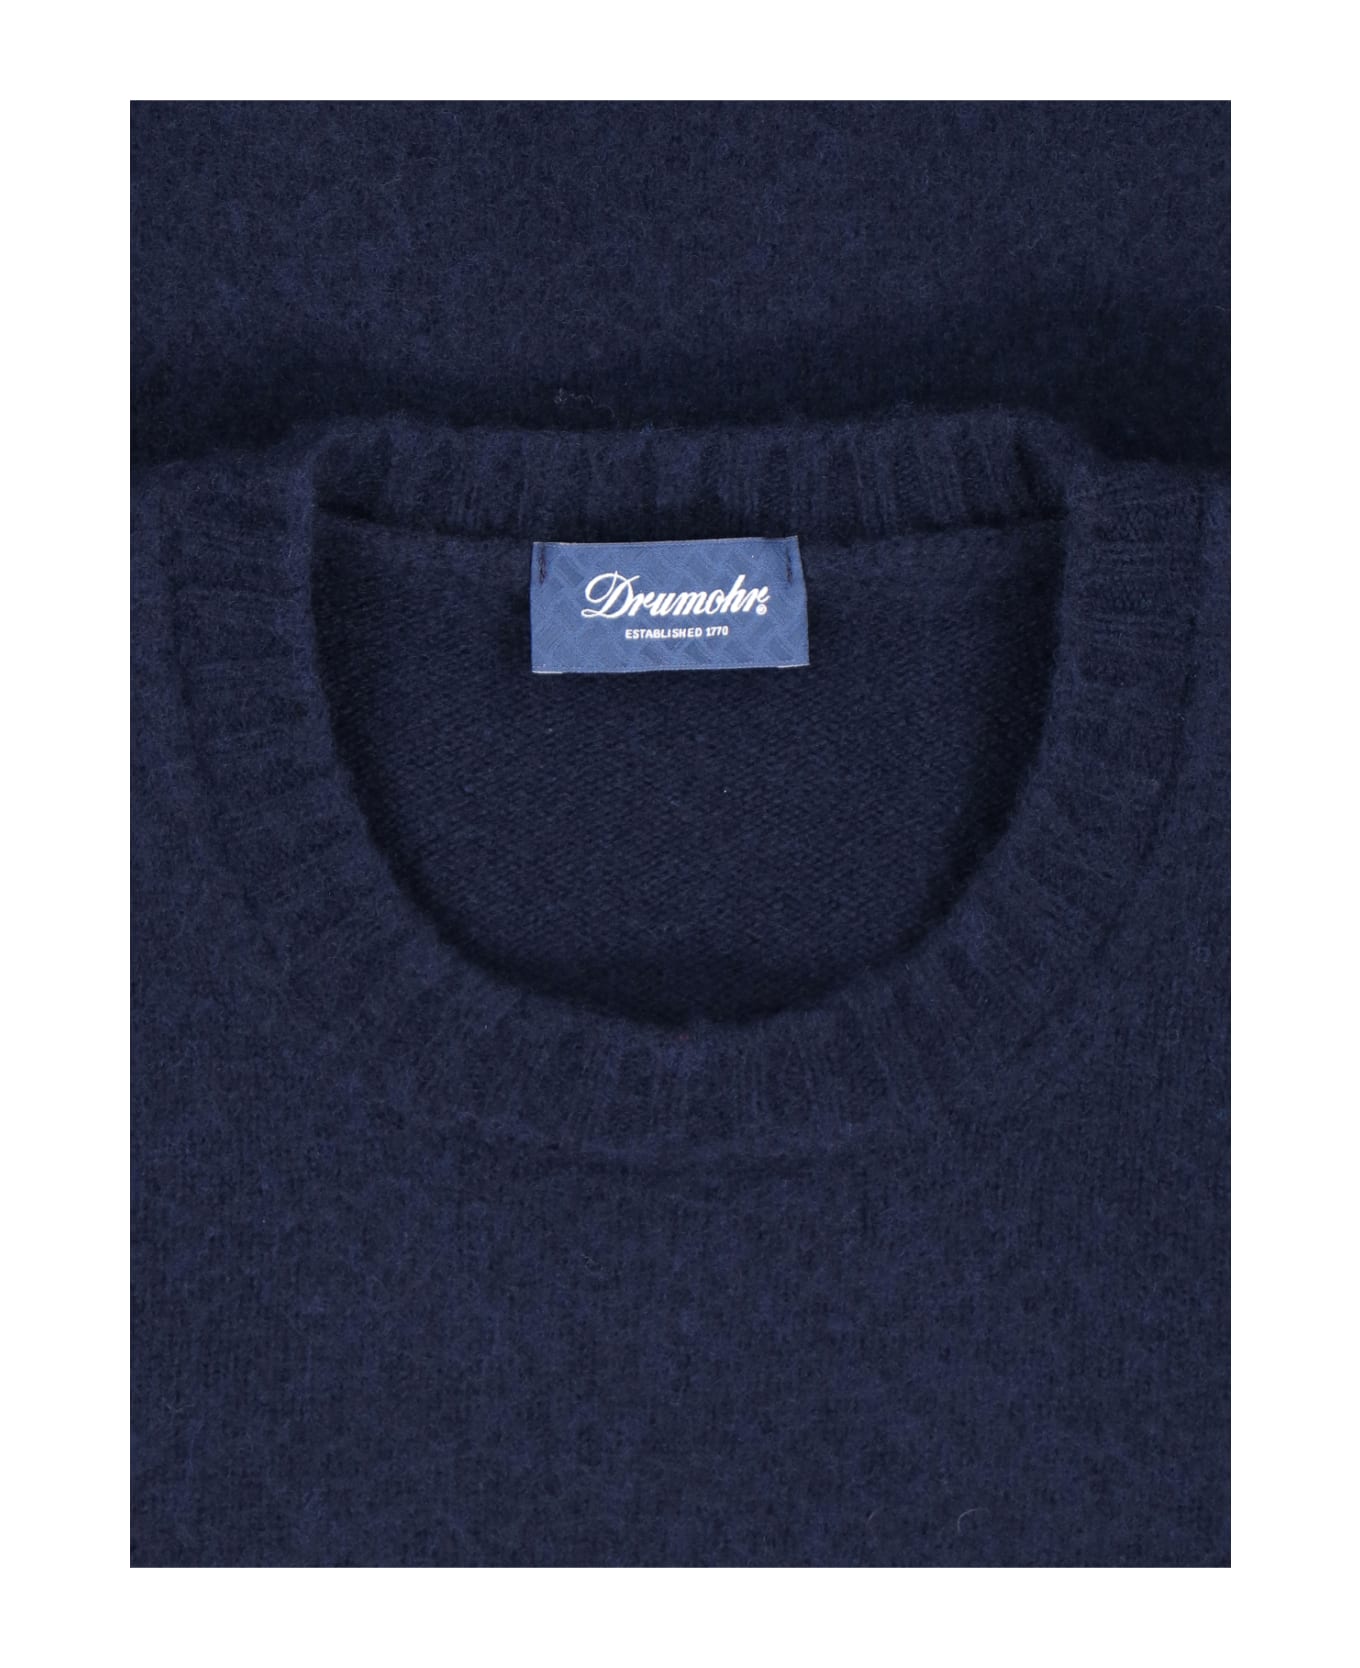 Drumohr - Classic Sweater ニットウェア